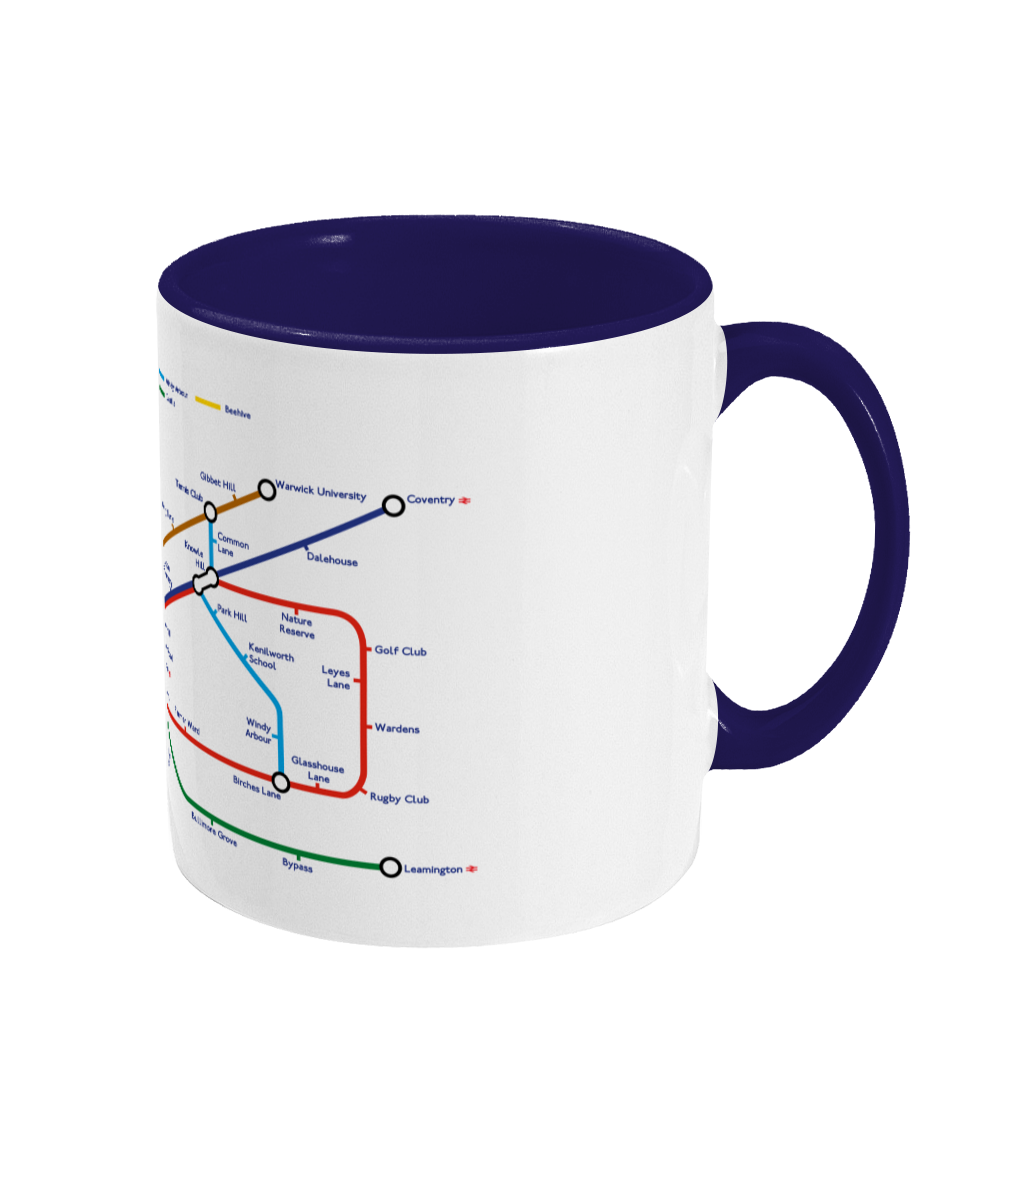 Maps and Signs Tube Map 'Kenilworth' Mug